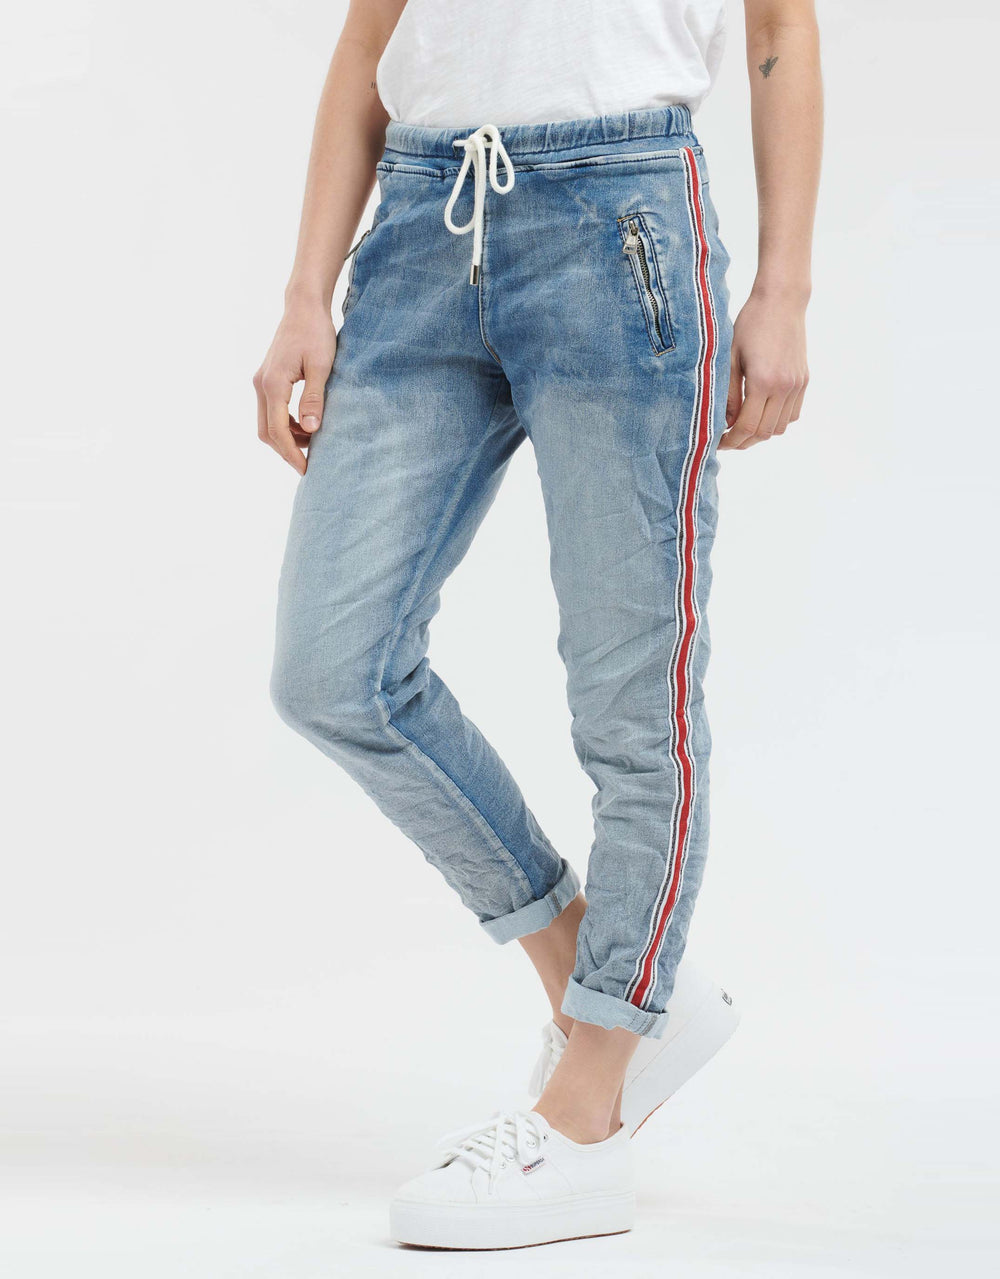 Ferrari "Sunday" Jeans - Mid Wash